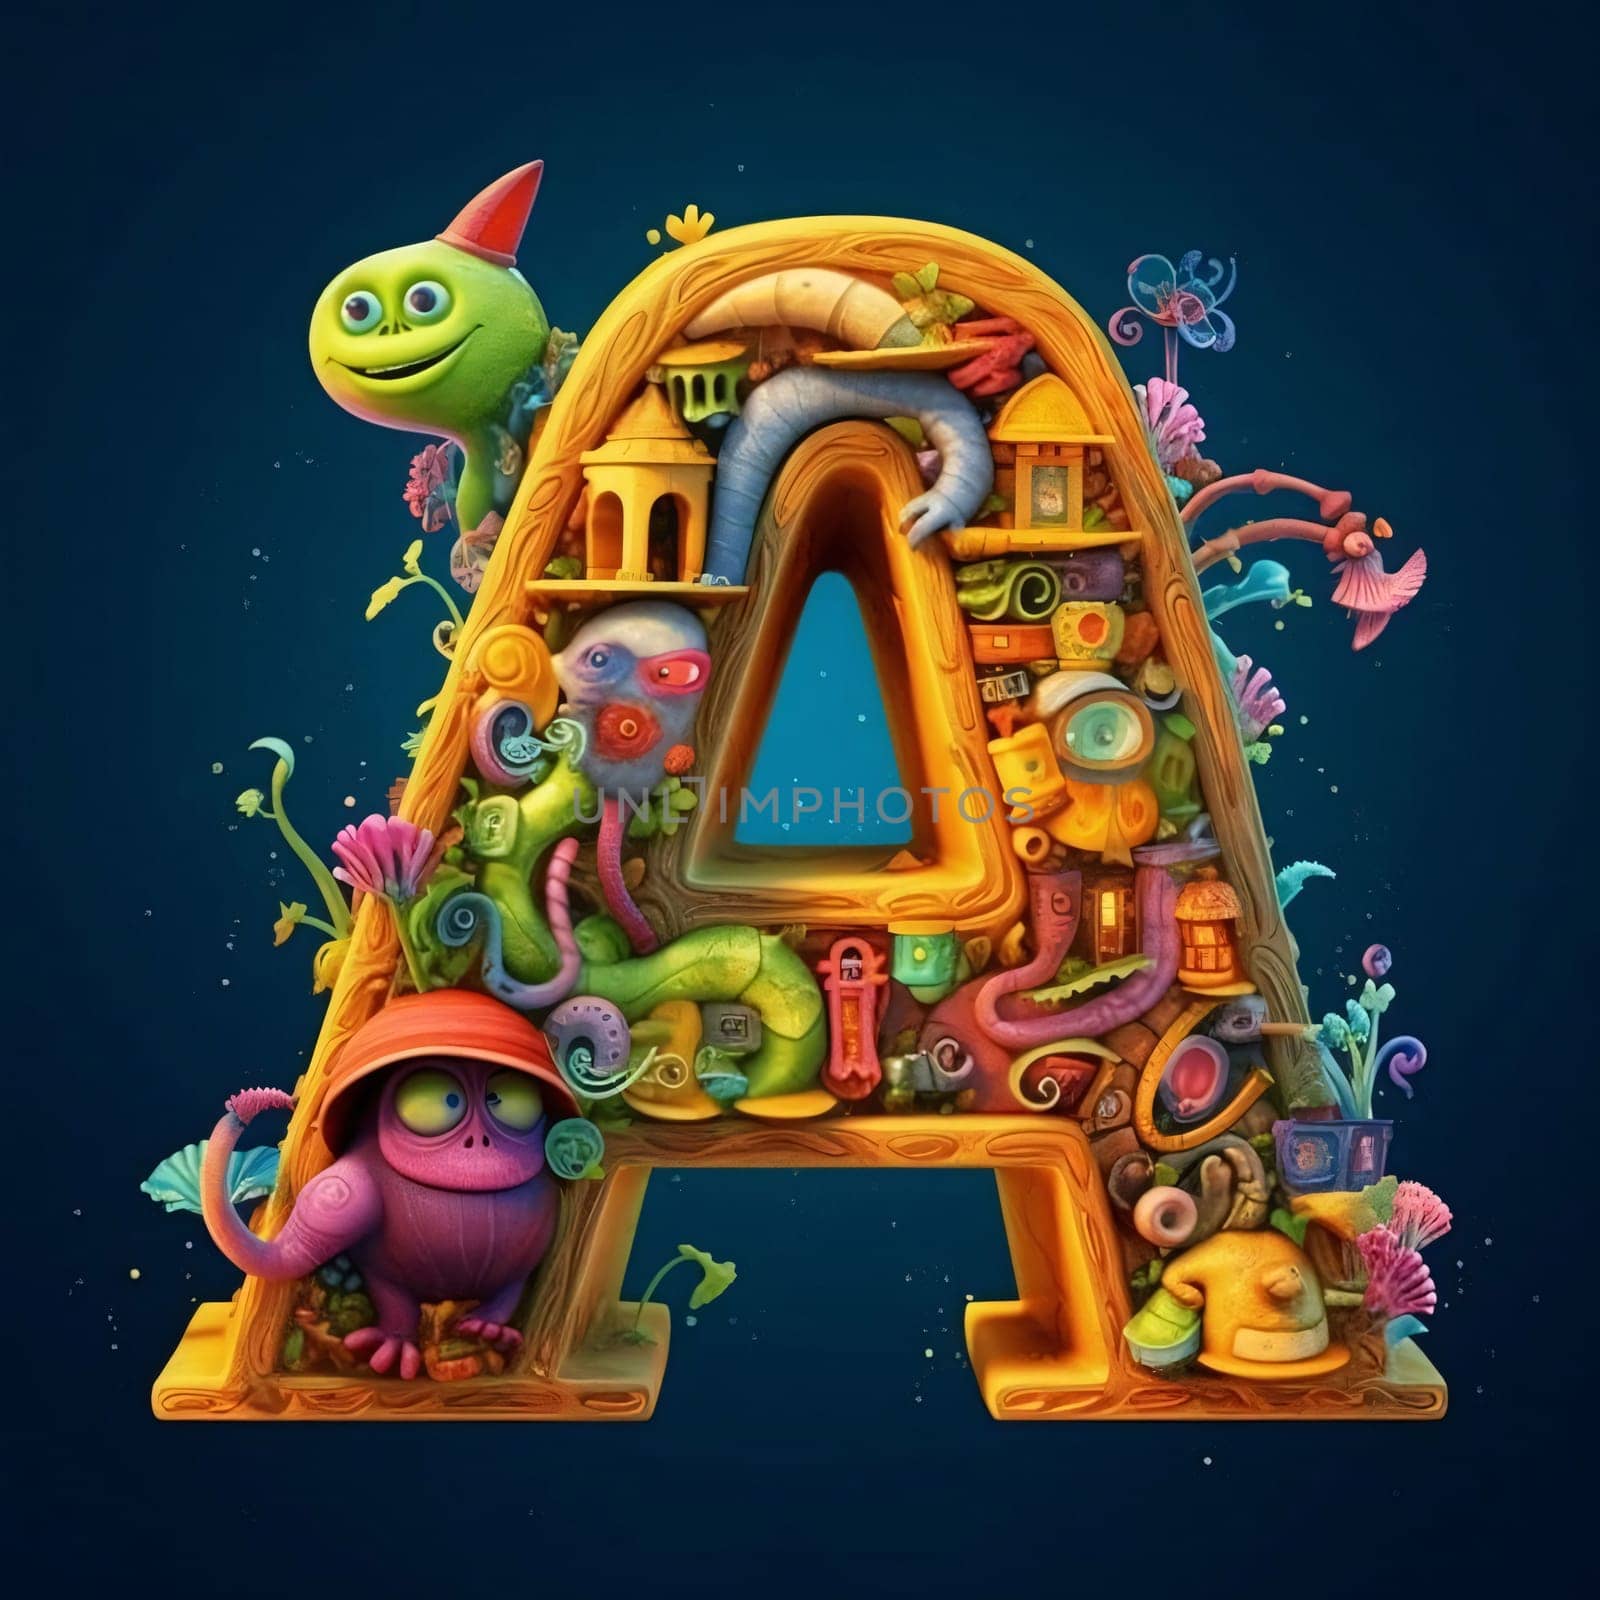 Graphic alphabet letters: Cartoon monster letter A for kids - illustration for children's book